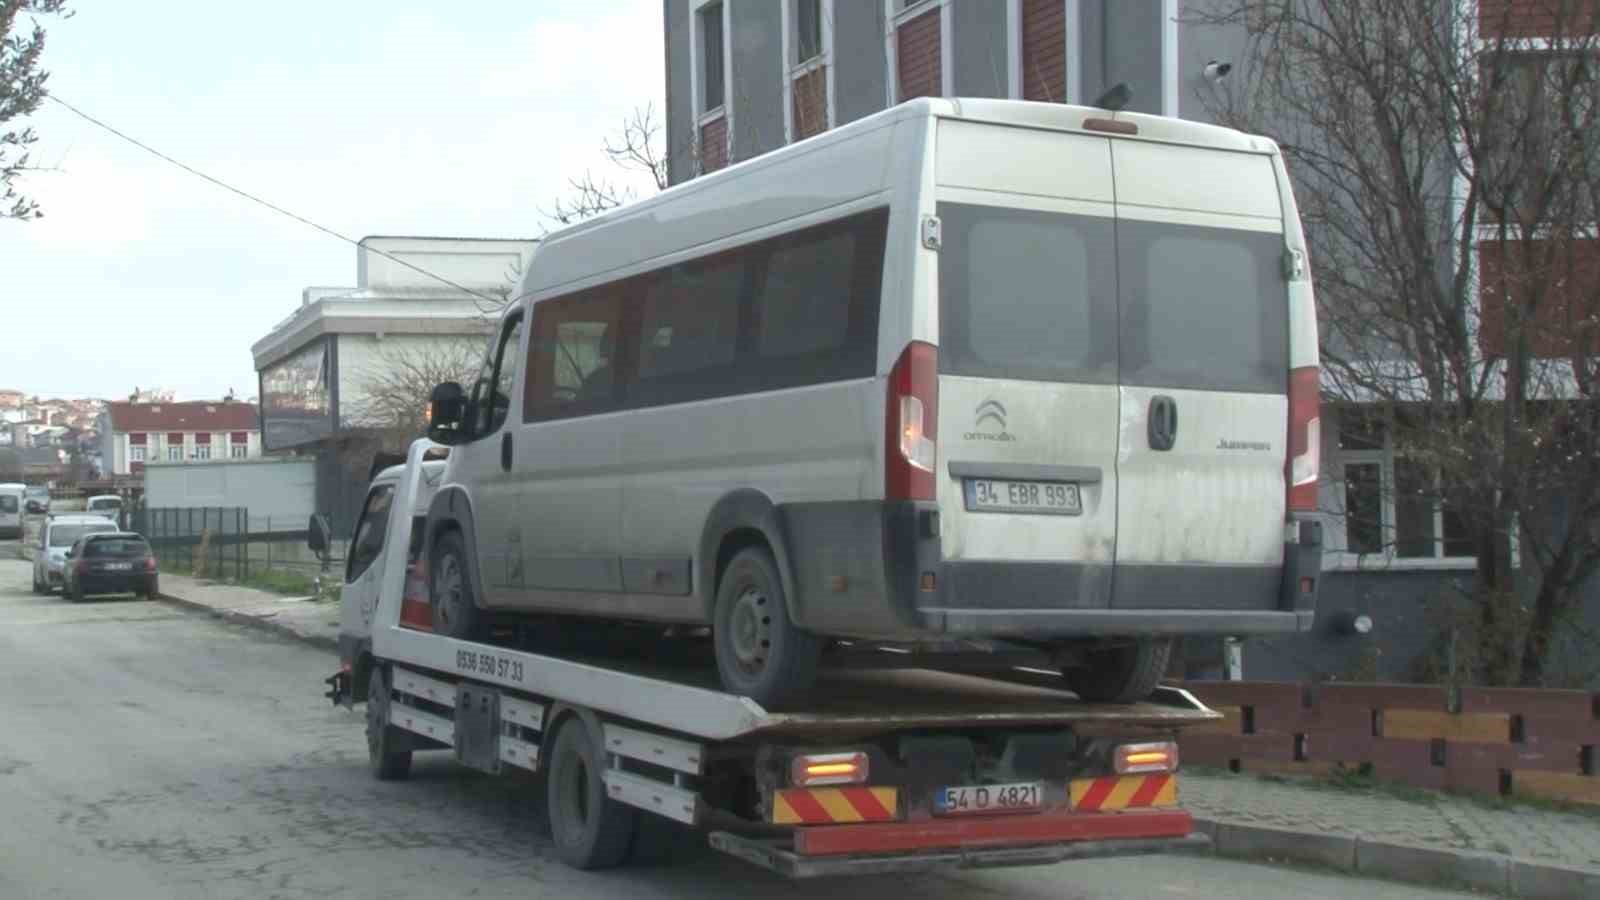 arnavutkoyde servis minibusunun carptigi trafik polisi yaralandi 3 qByfCsXd